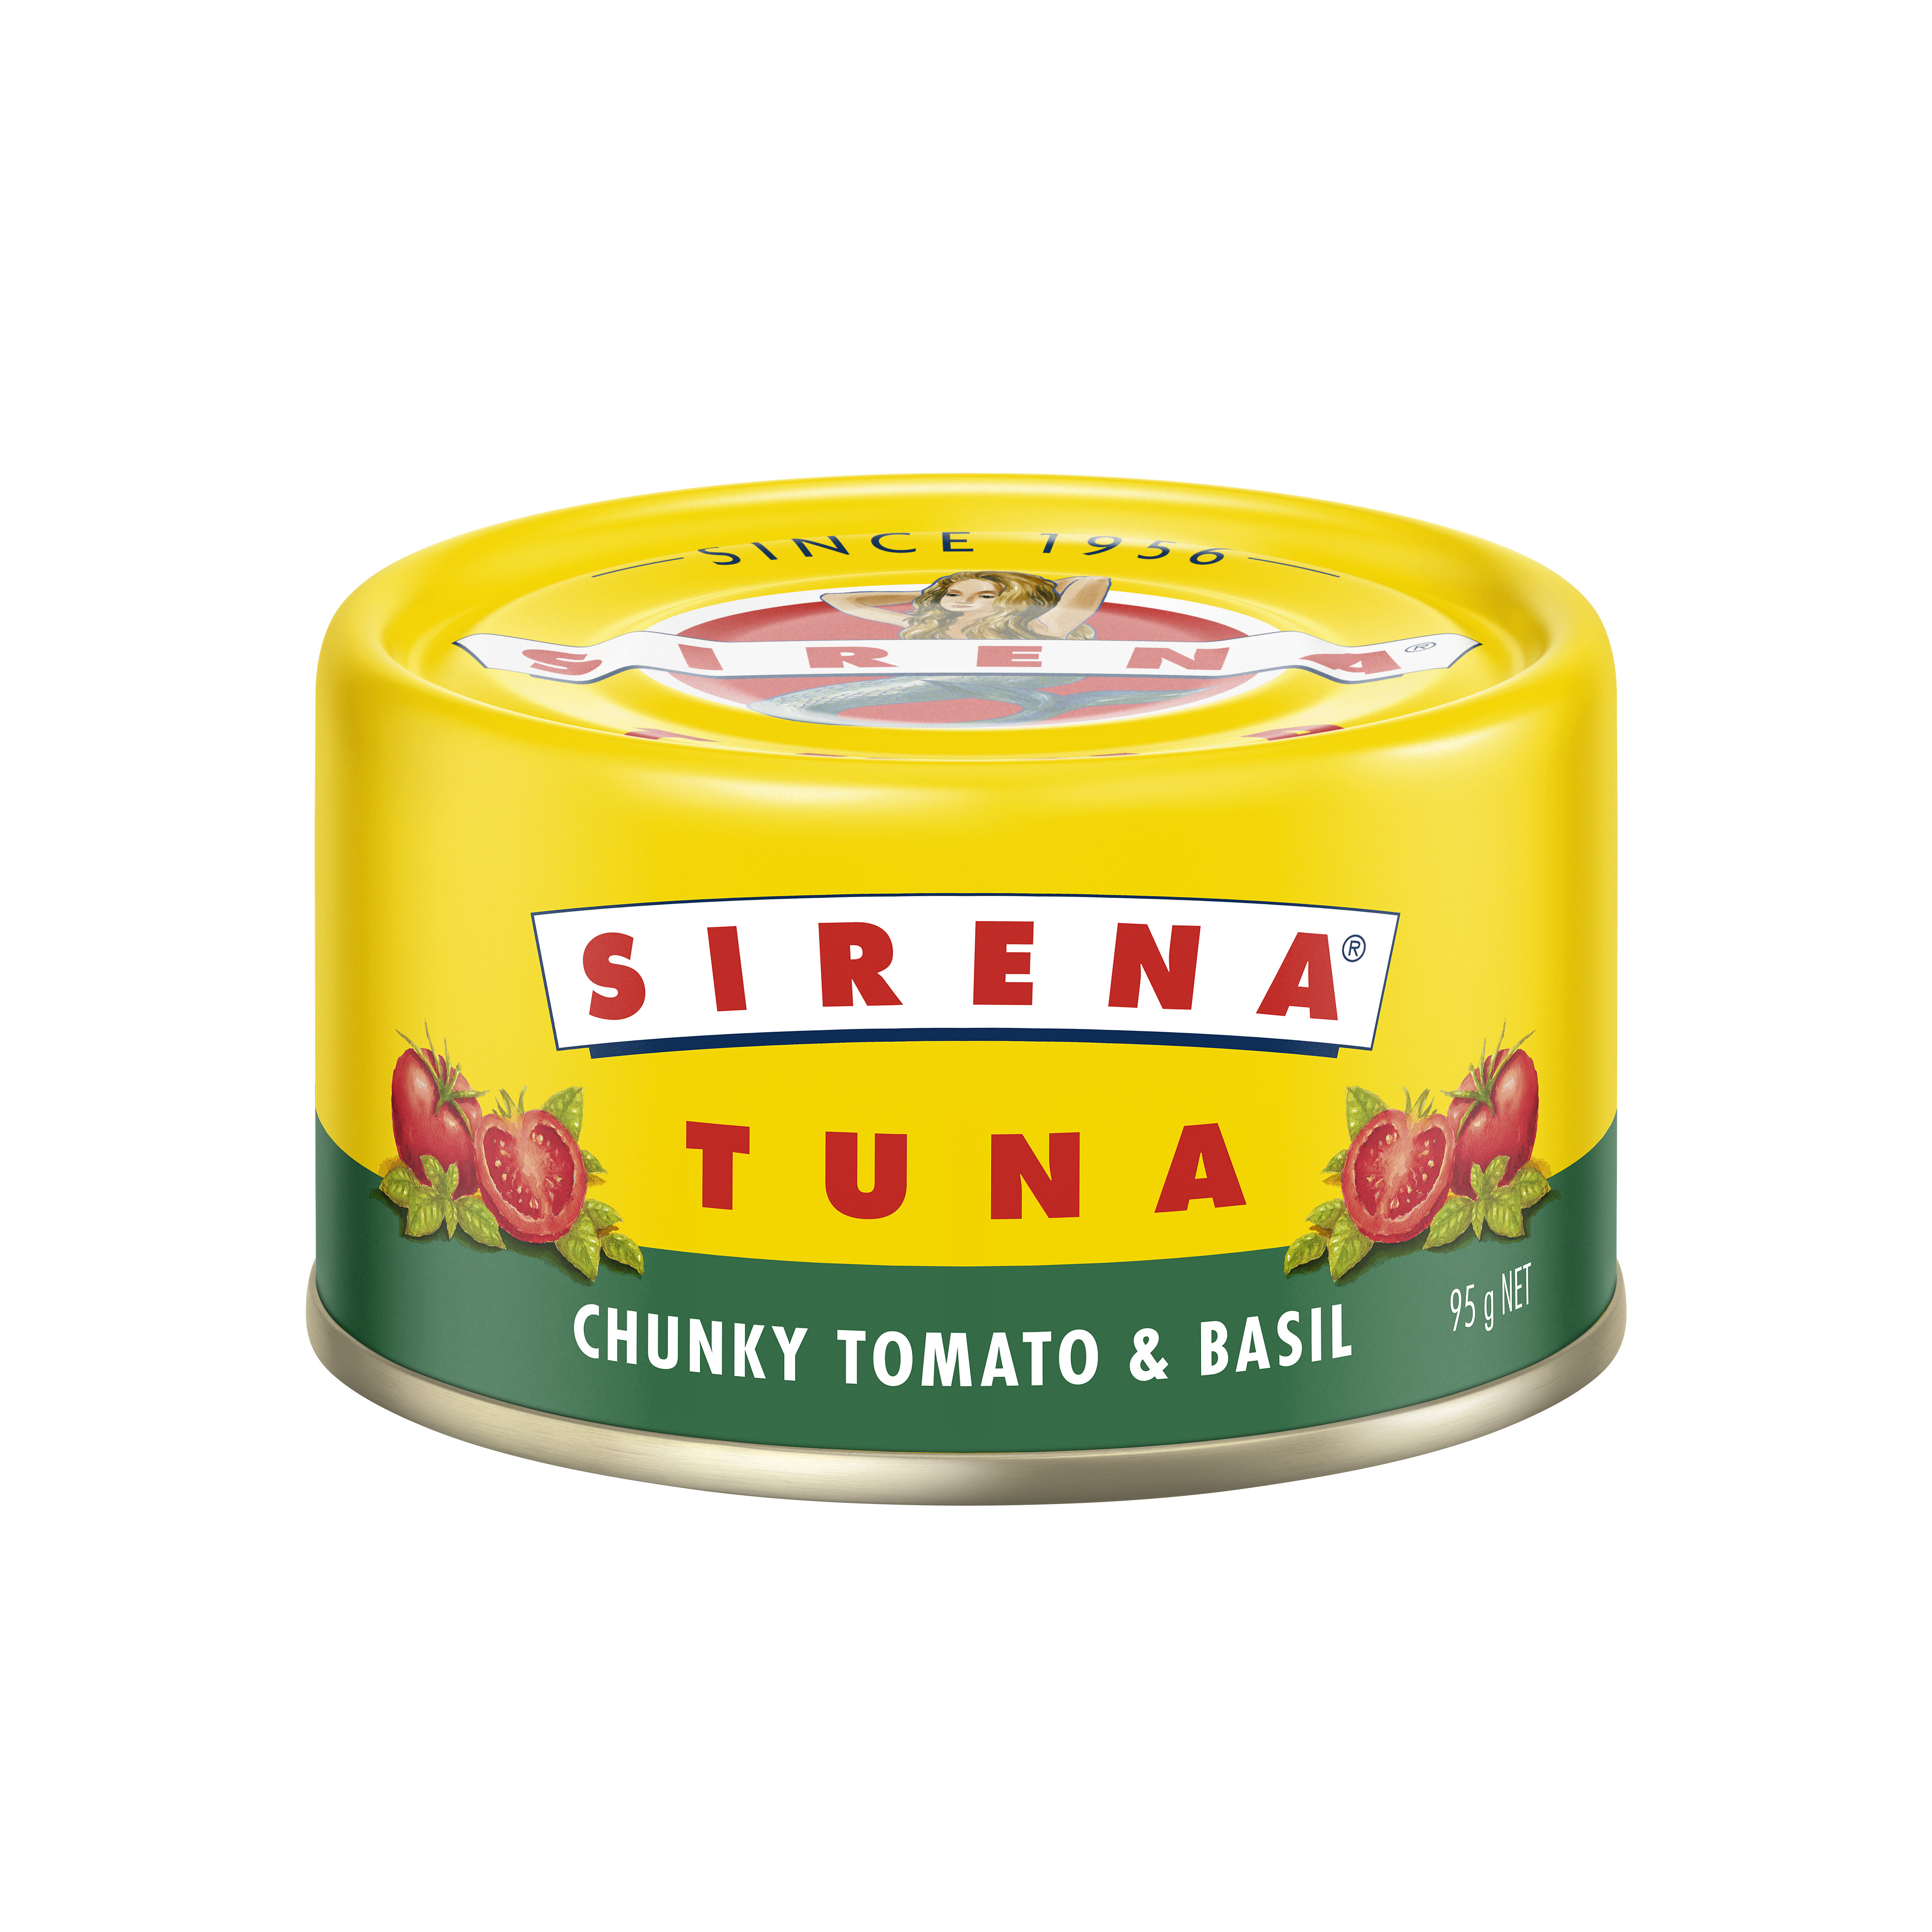 Sirena Tuna Chunky Tomato & Basil can image